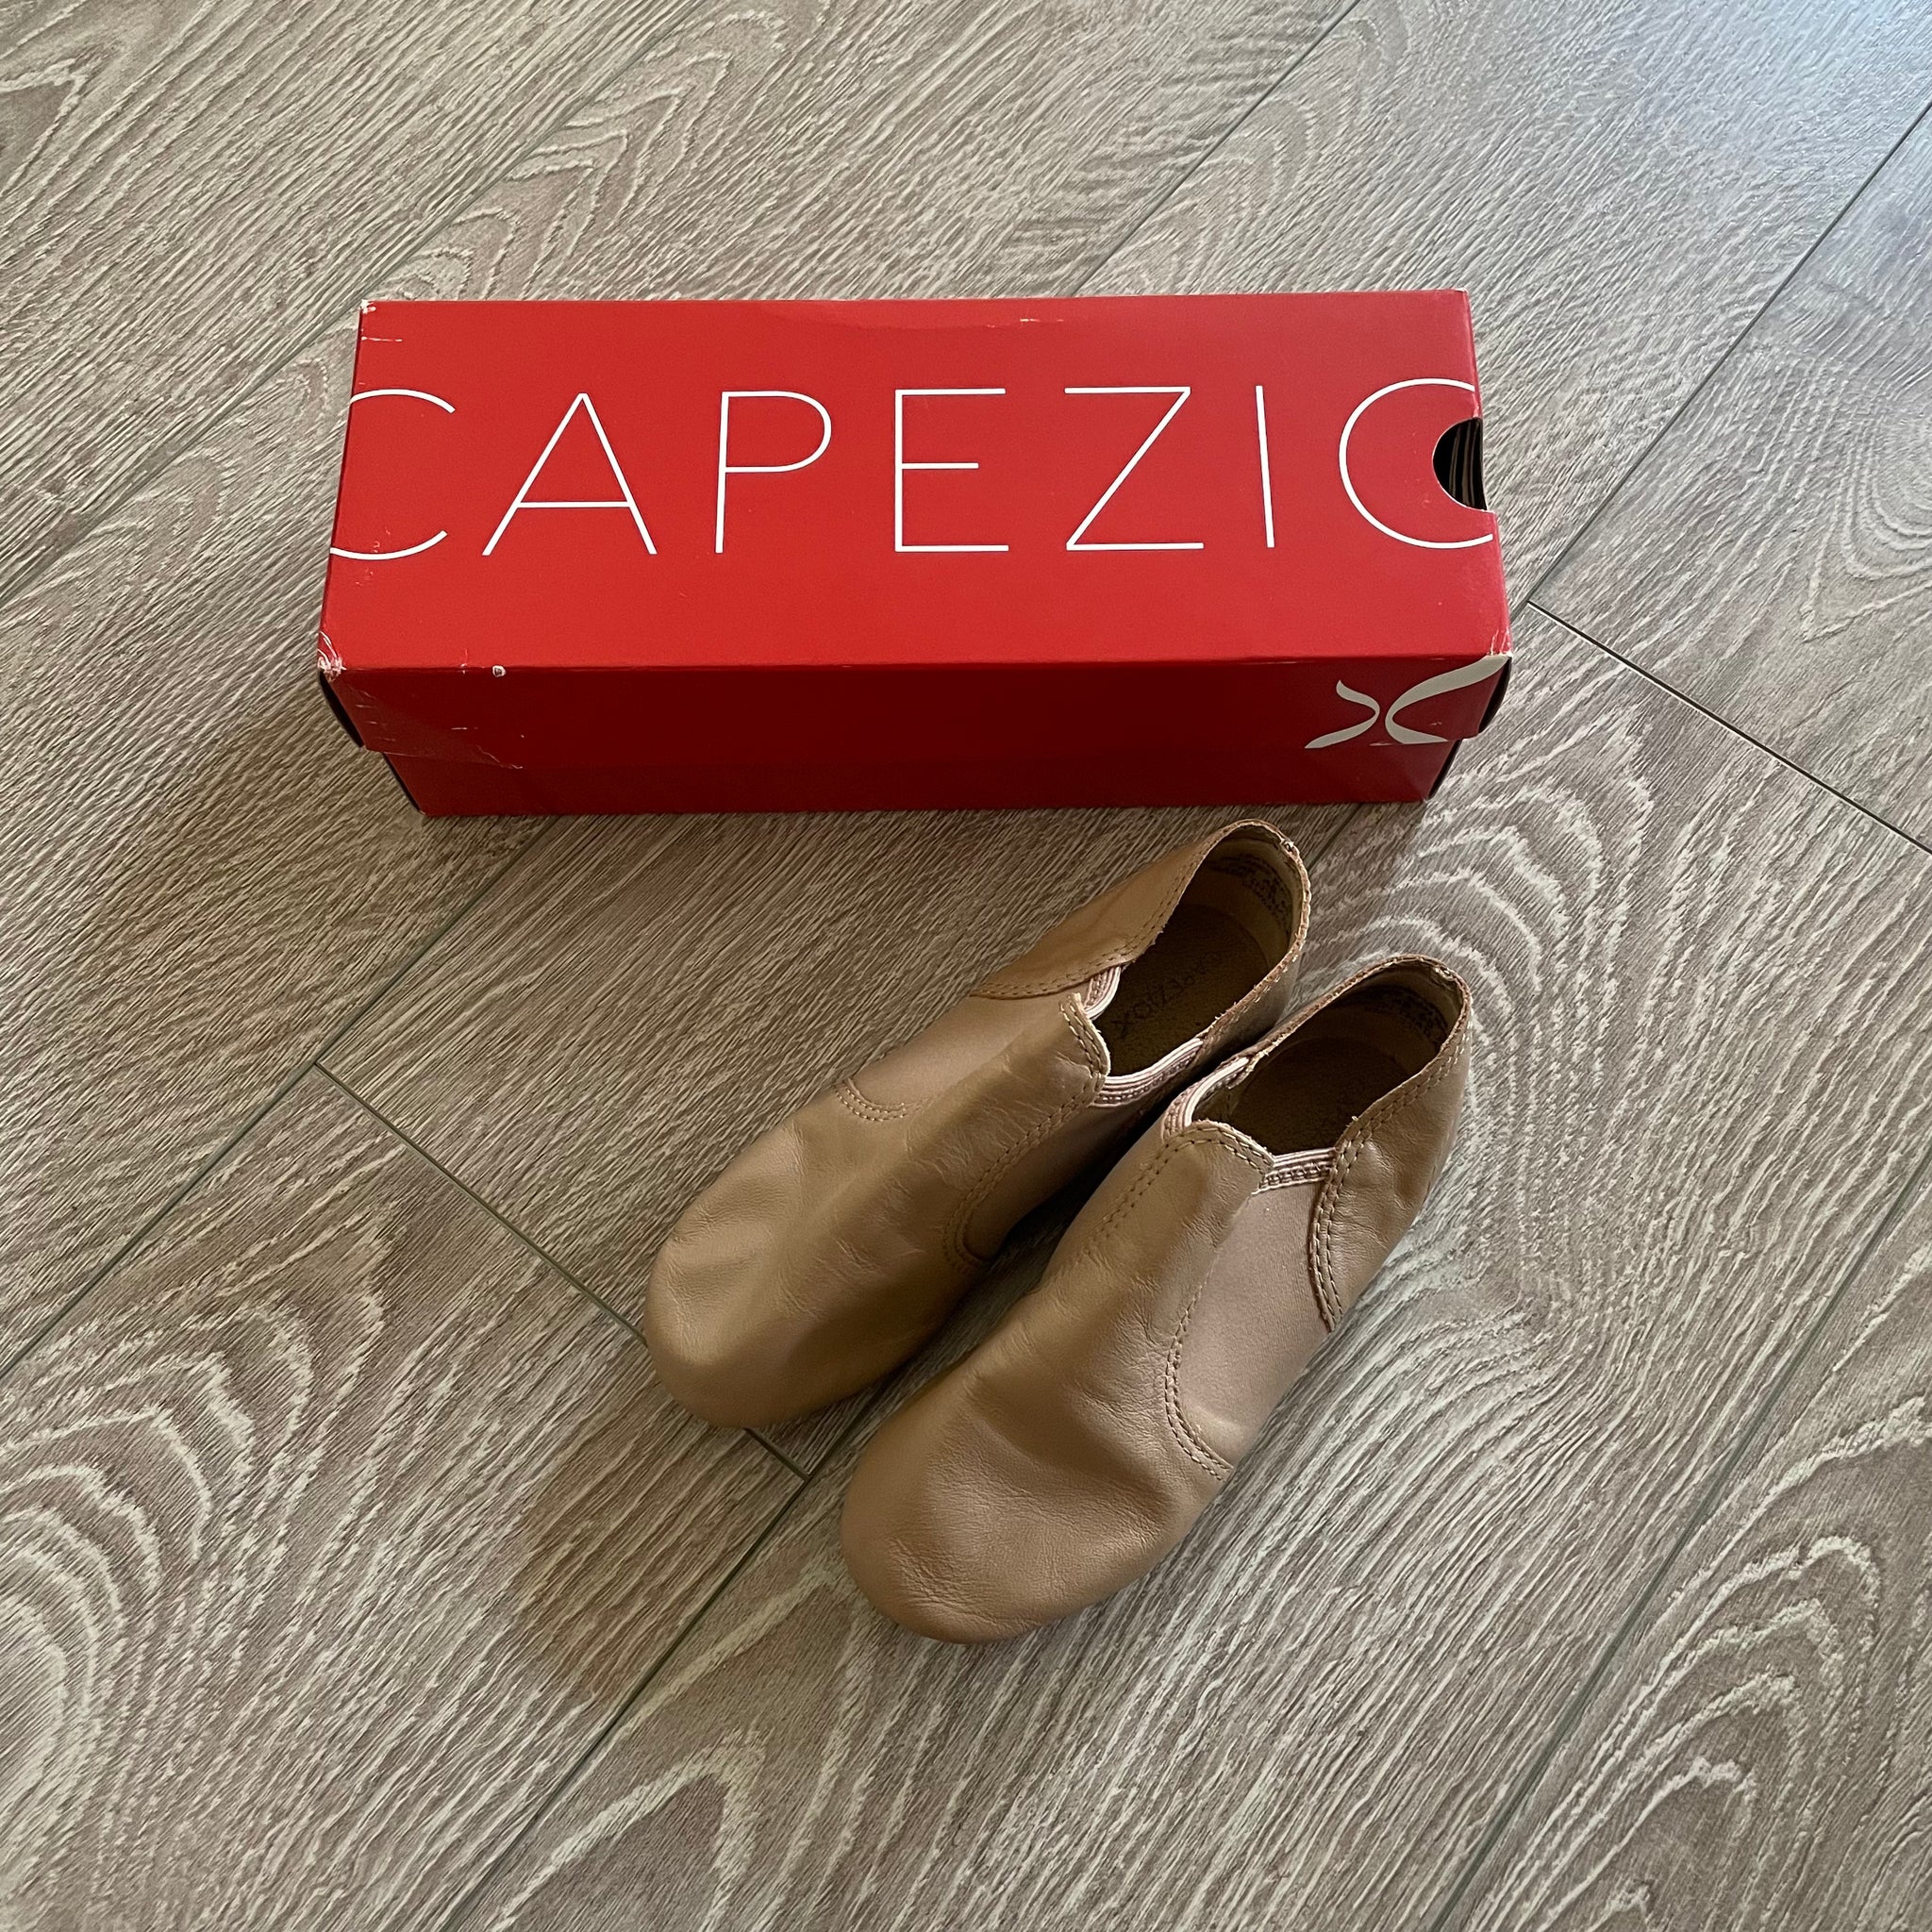 Capezio, Slip On Jazz Shoes in Tan, Size Kids 12.5M – Dancewear